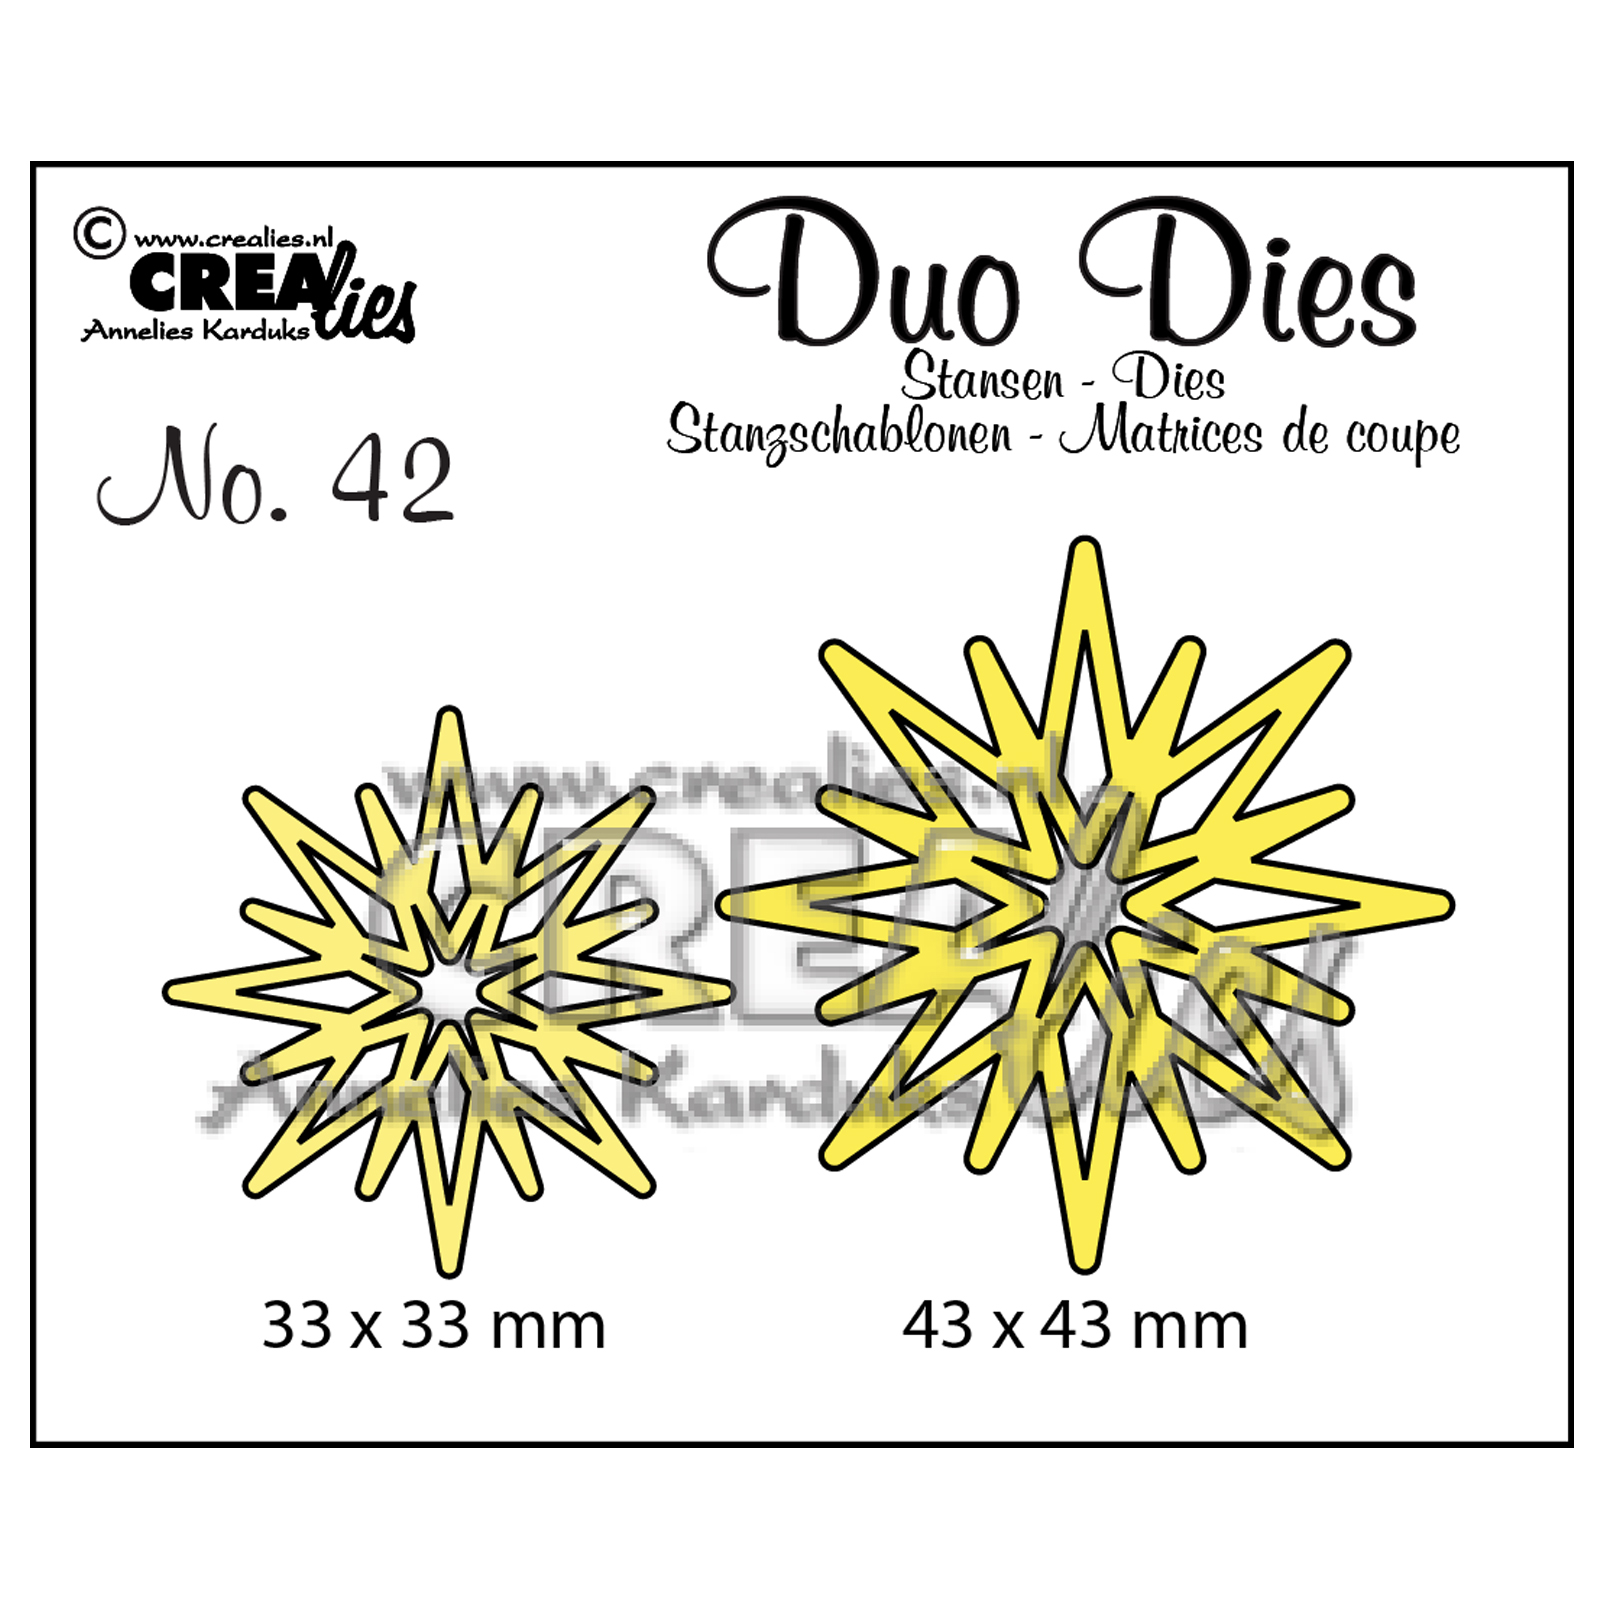 Crealies • Duo Dies no.42 Sternen